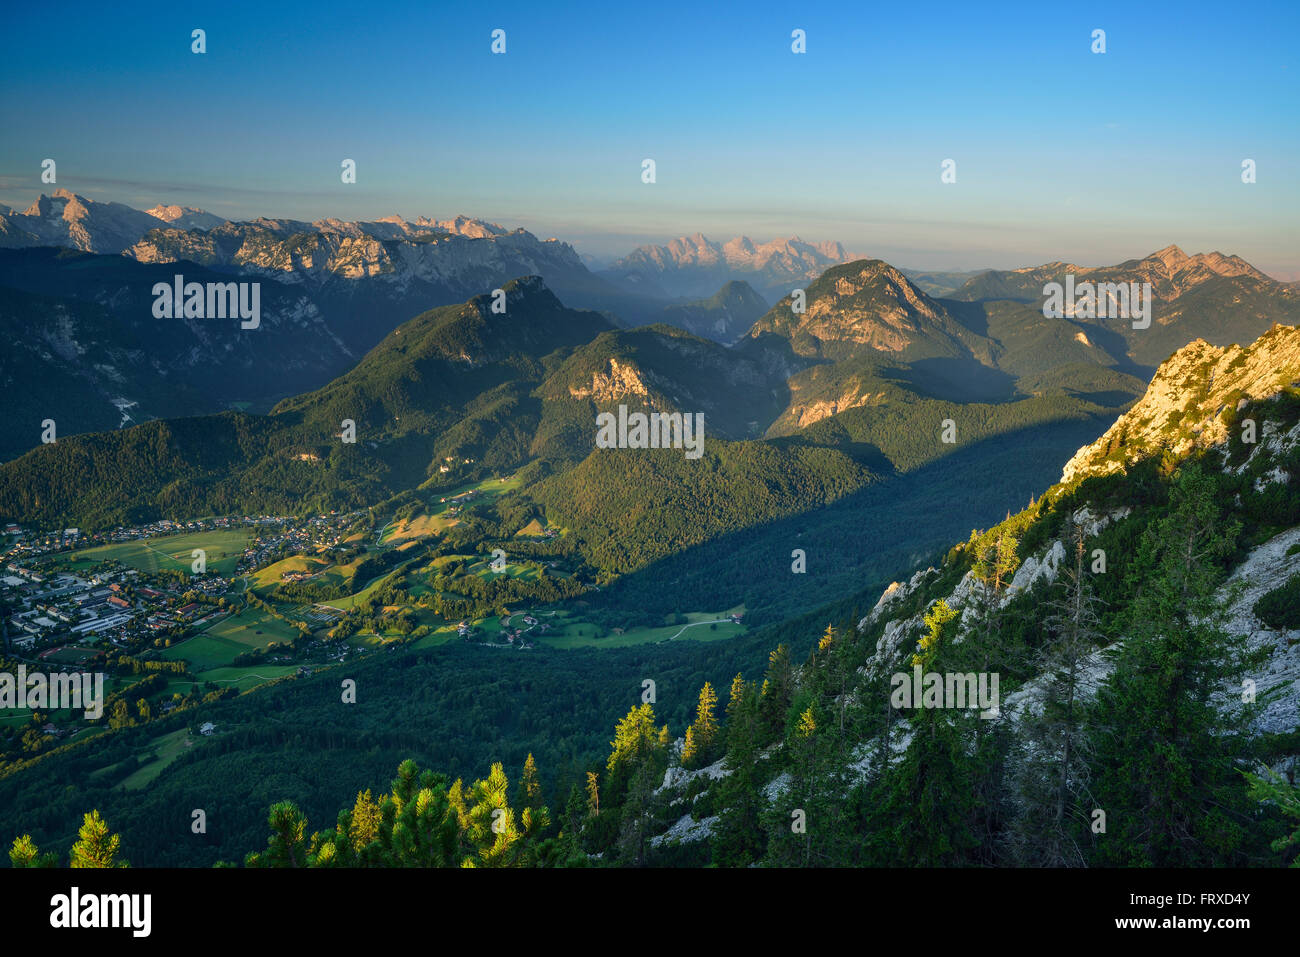 View from mount Hochstaufen over valley of Bad Reichenhall, Chiemgau Alps, Chiemgau, Upper Bavaria, Bavaria, Germany Stock Photo